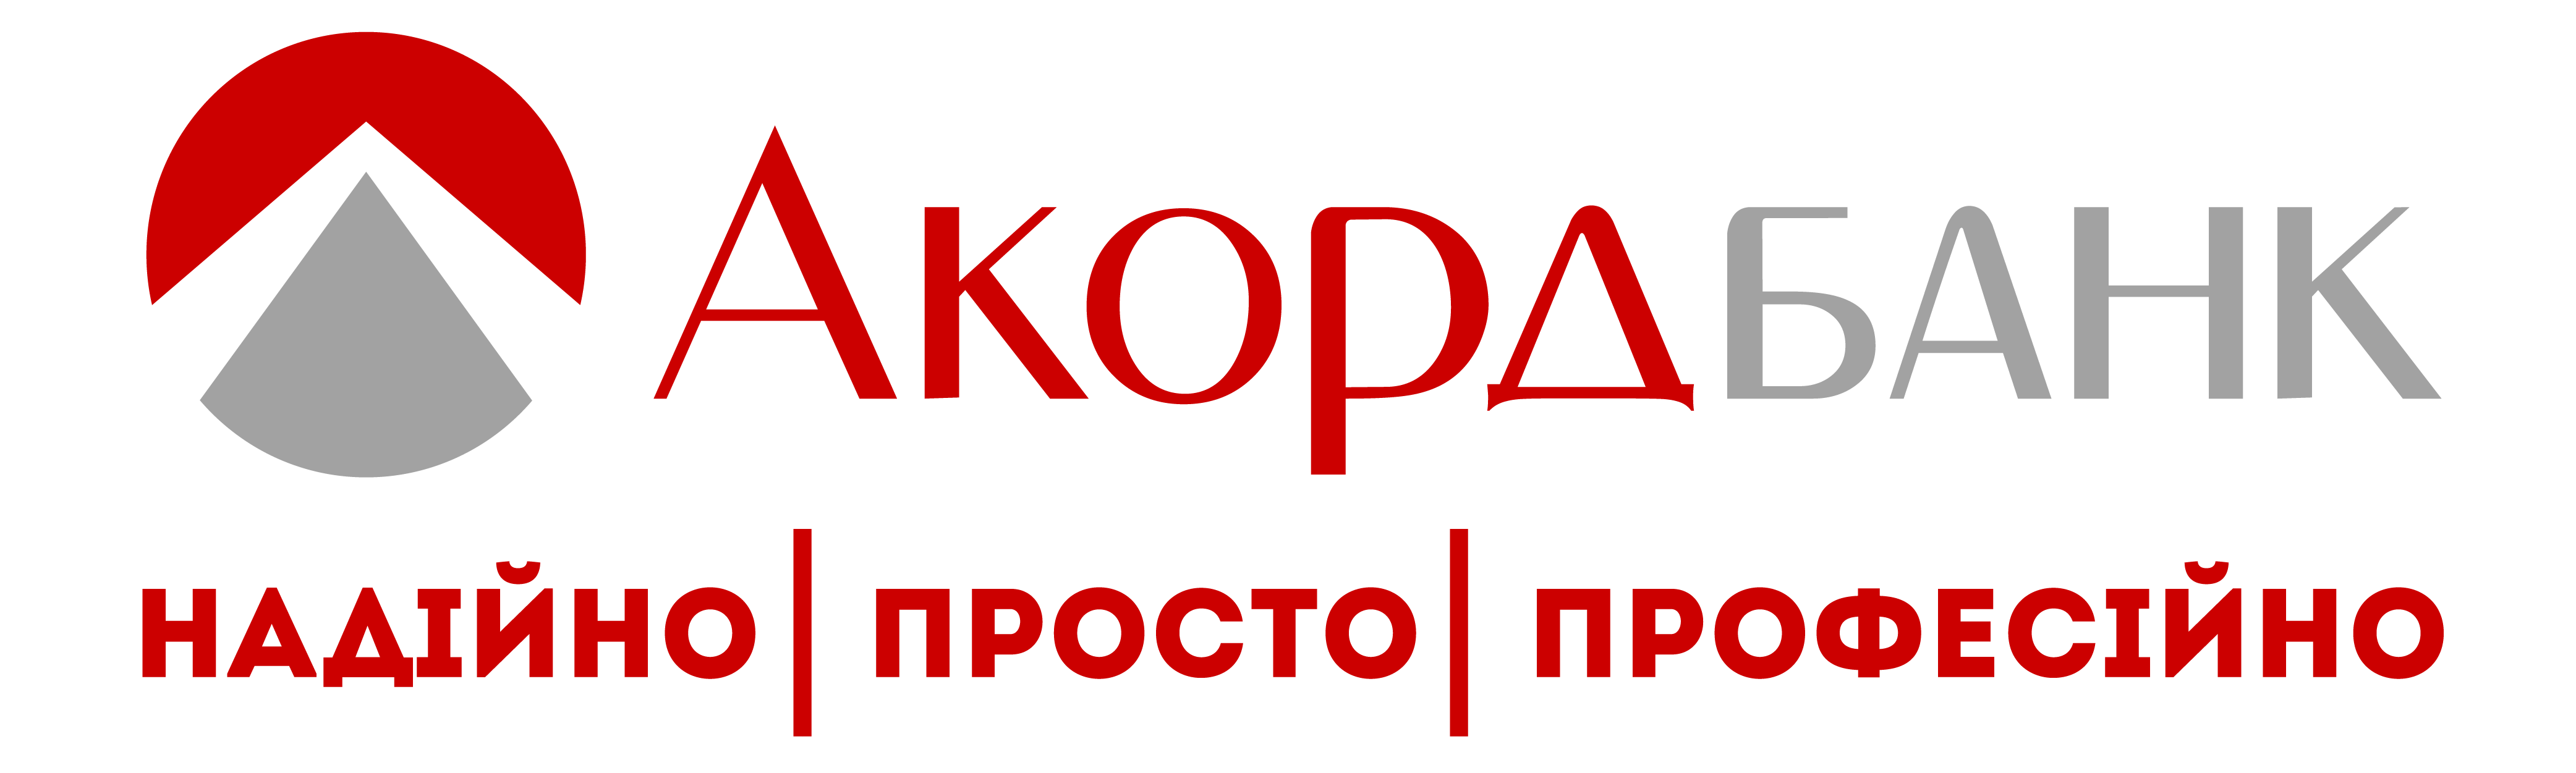 Logo Accordbank rg g NPP 72 01